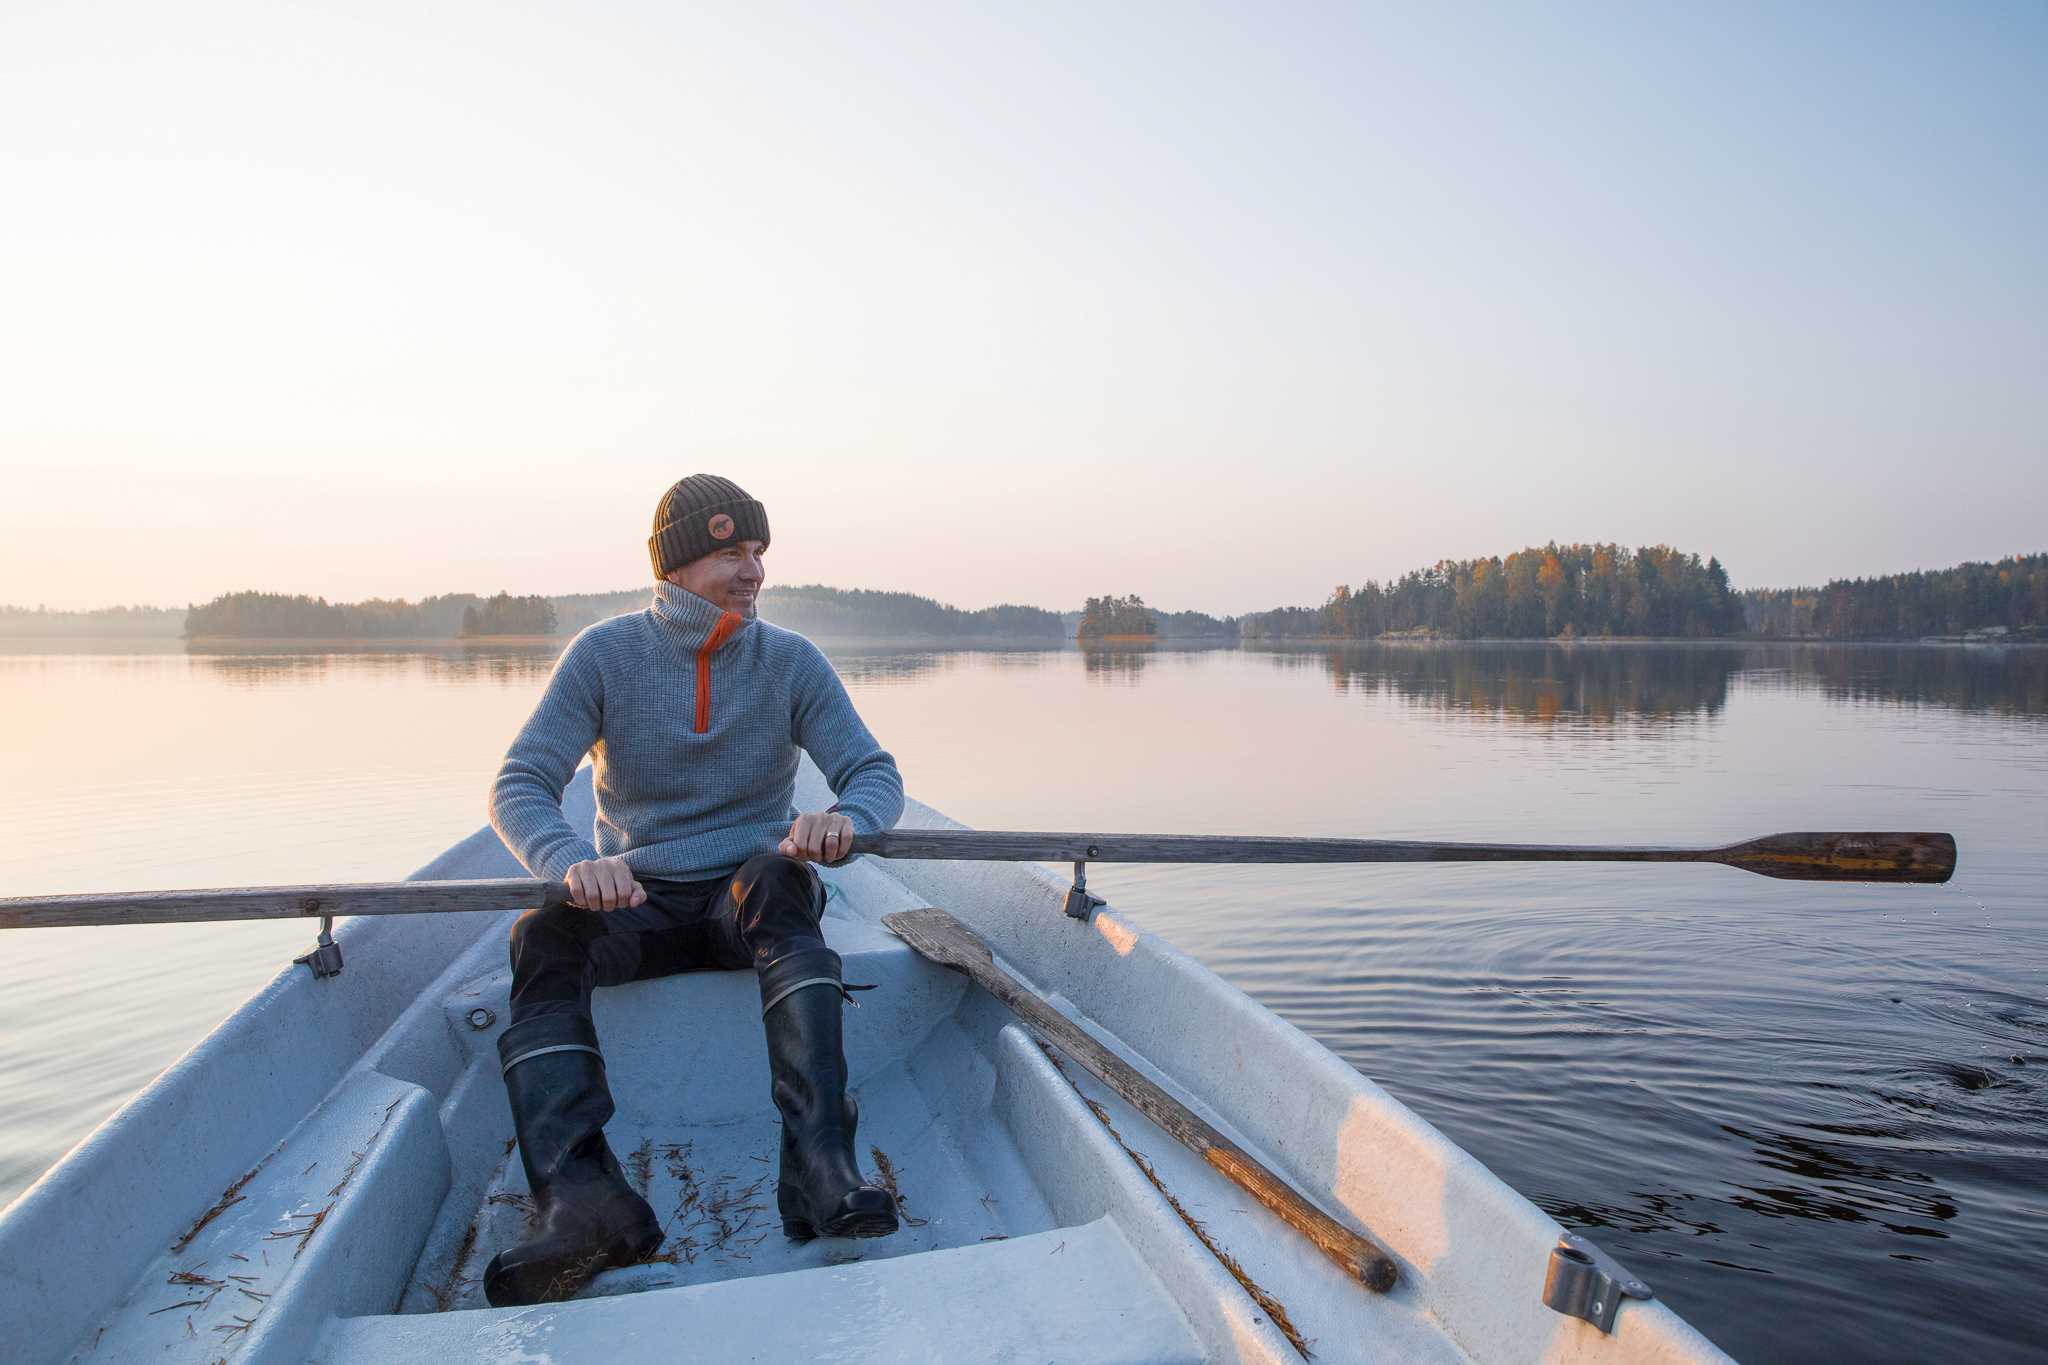 Rental cottage vuokramökki Saimaa rowing soutu